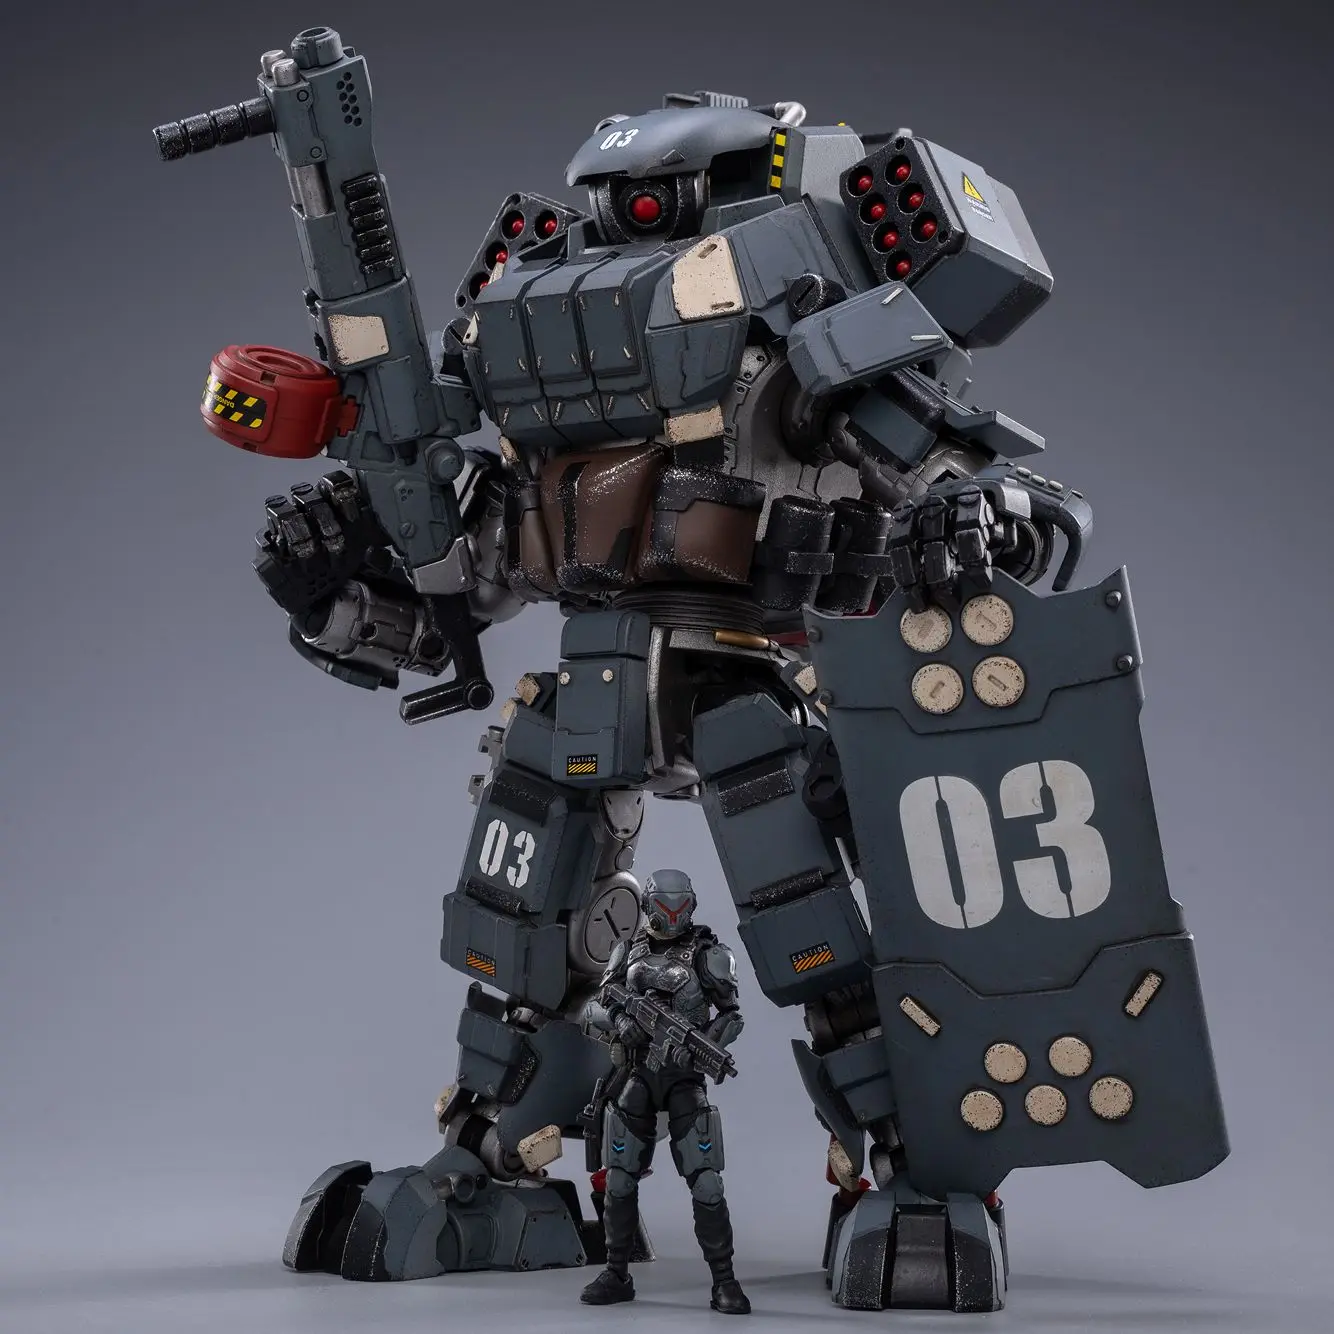 

JOYTOY 1/25 Action Figure Mecha Iron Wrecker 03 Urban Warfare 04 Heavy Firepower Anime Collection Model Toy Gifts